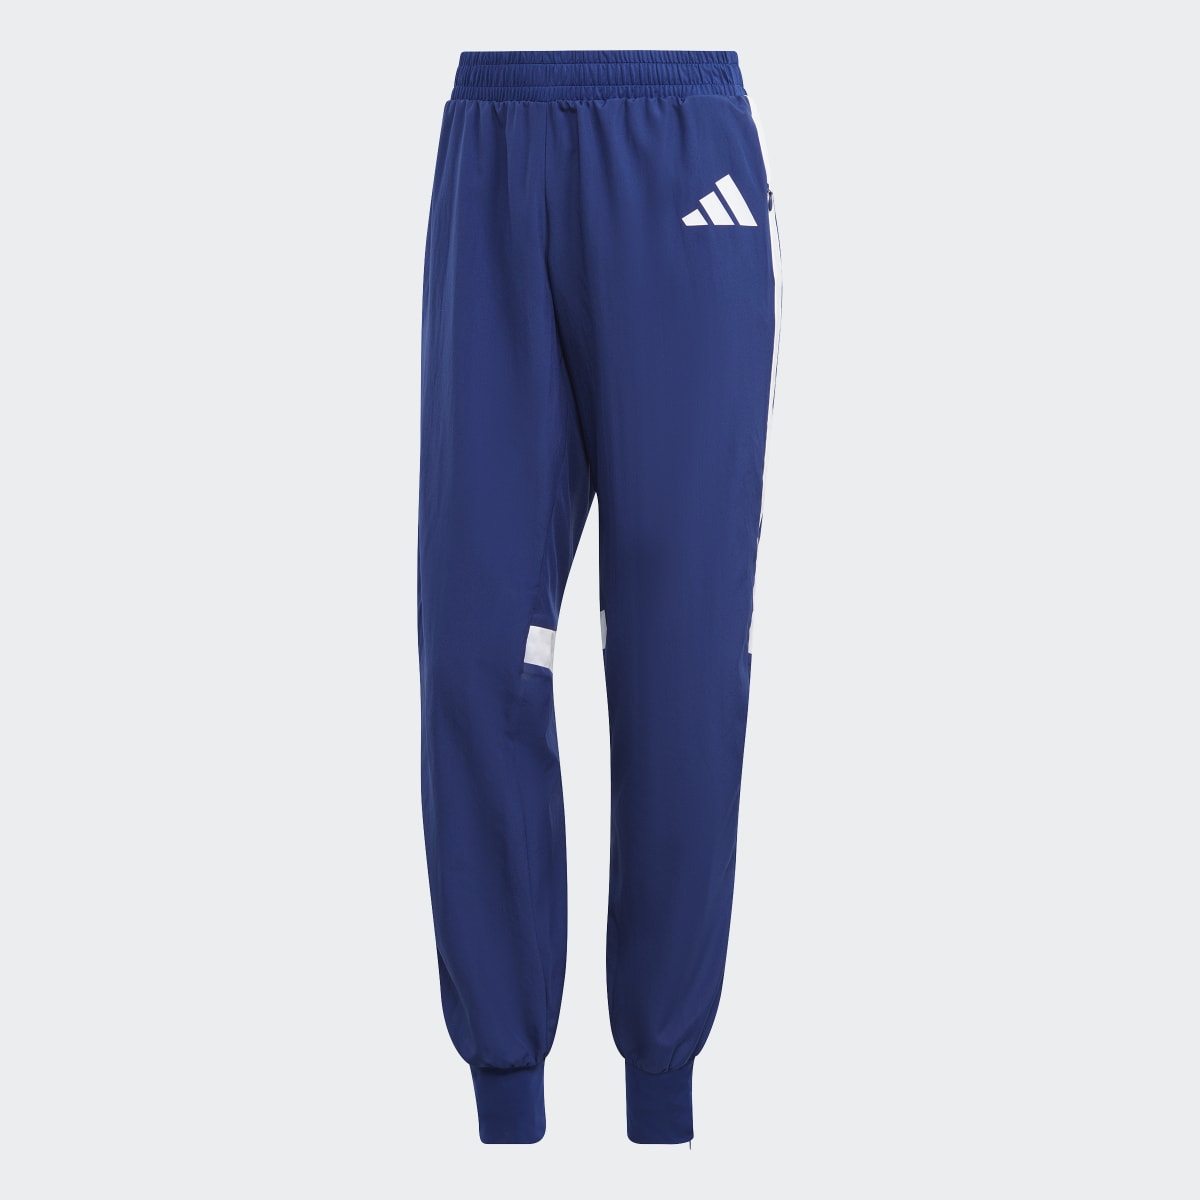 Adidas Track Pants. 4